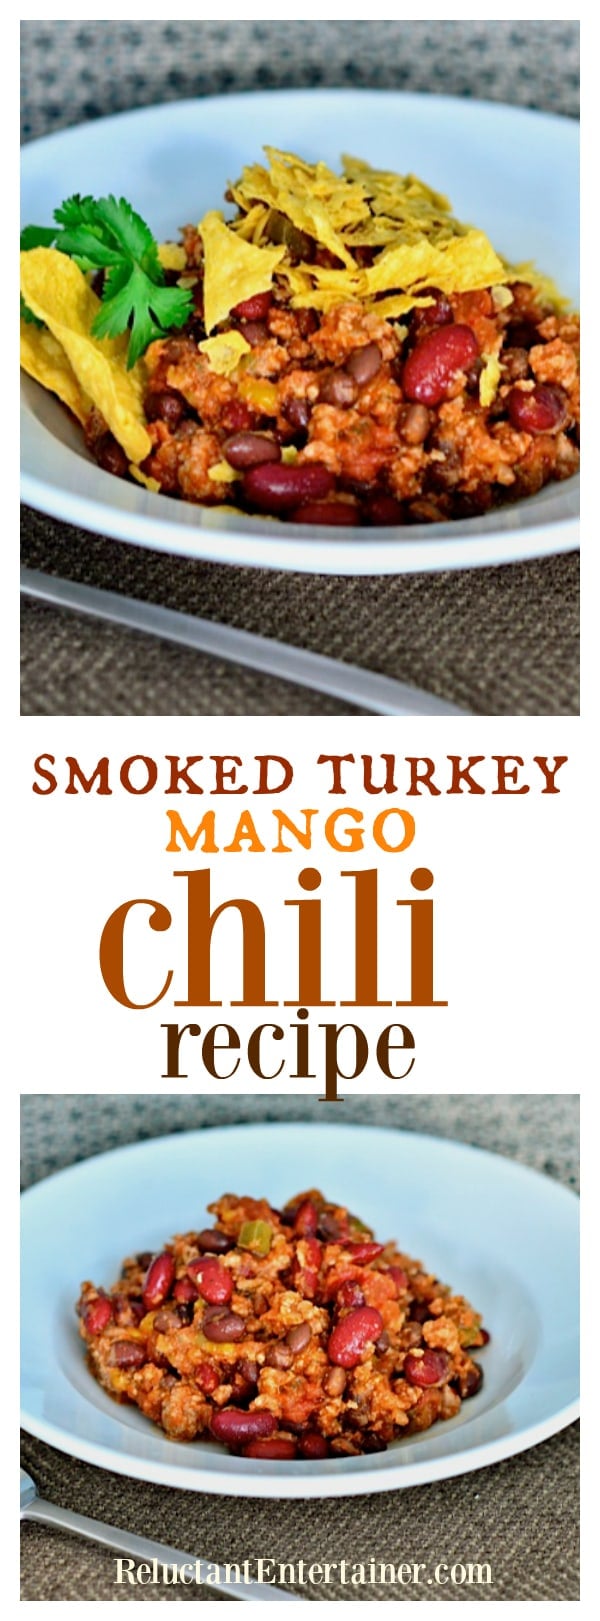 Smoked Turkey Mango Chili Recipe